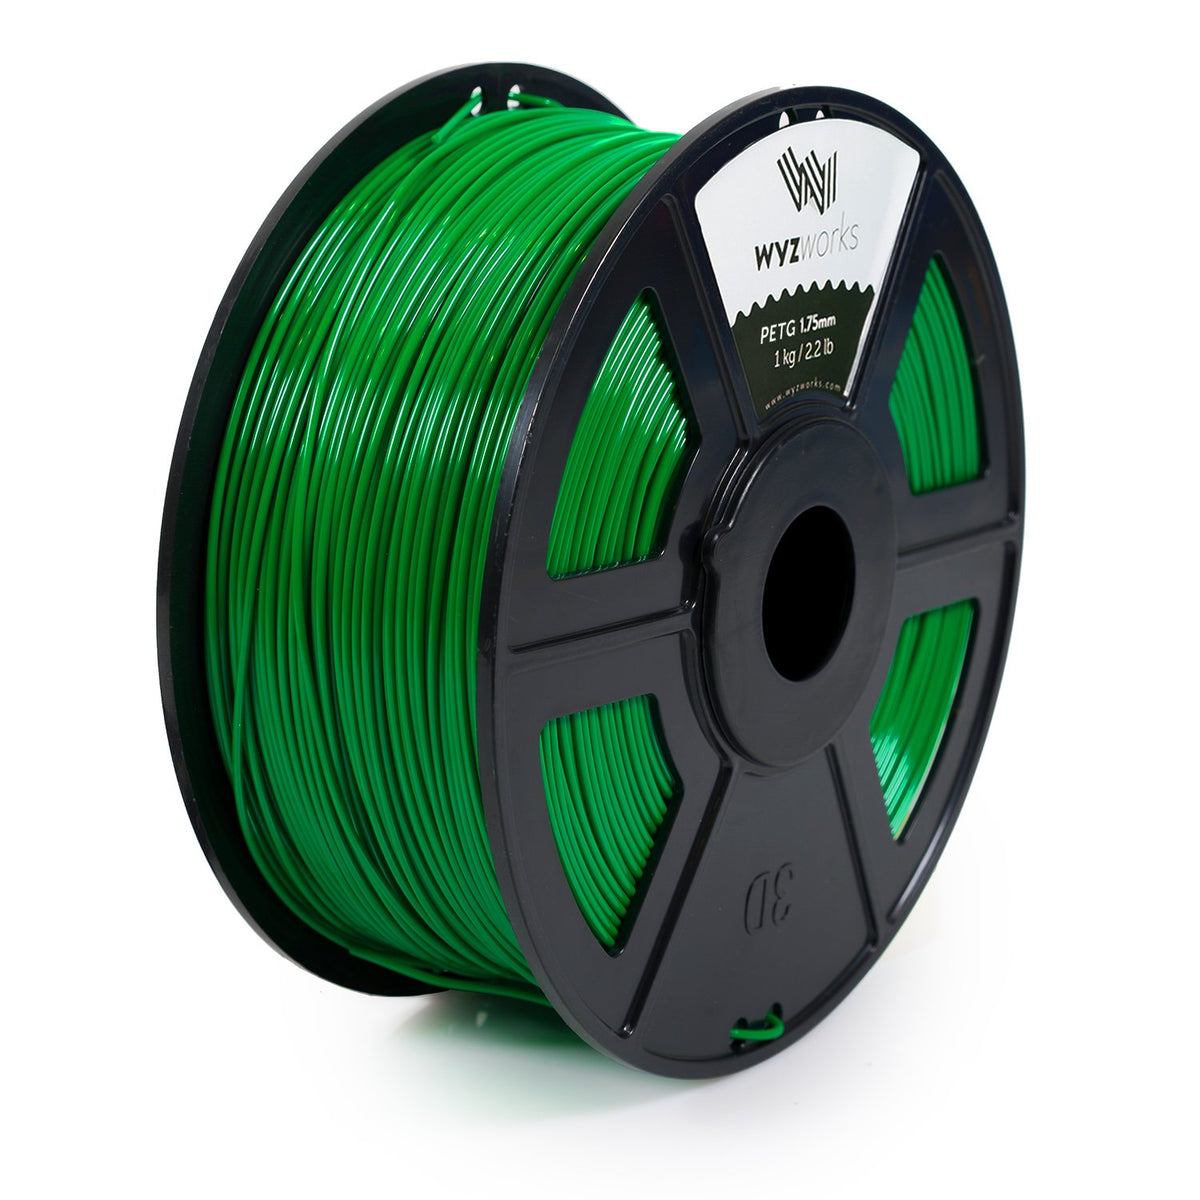 WYZworks PETG 1.75mm (Green) Premium 3D Printer Filament - Dimensional Accuracy +/- 0.05mm 1kg / 2.2lb + [ Multiple Color Options Available ]